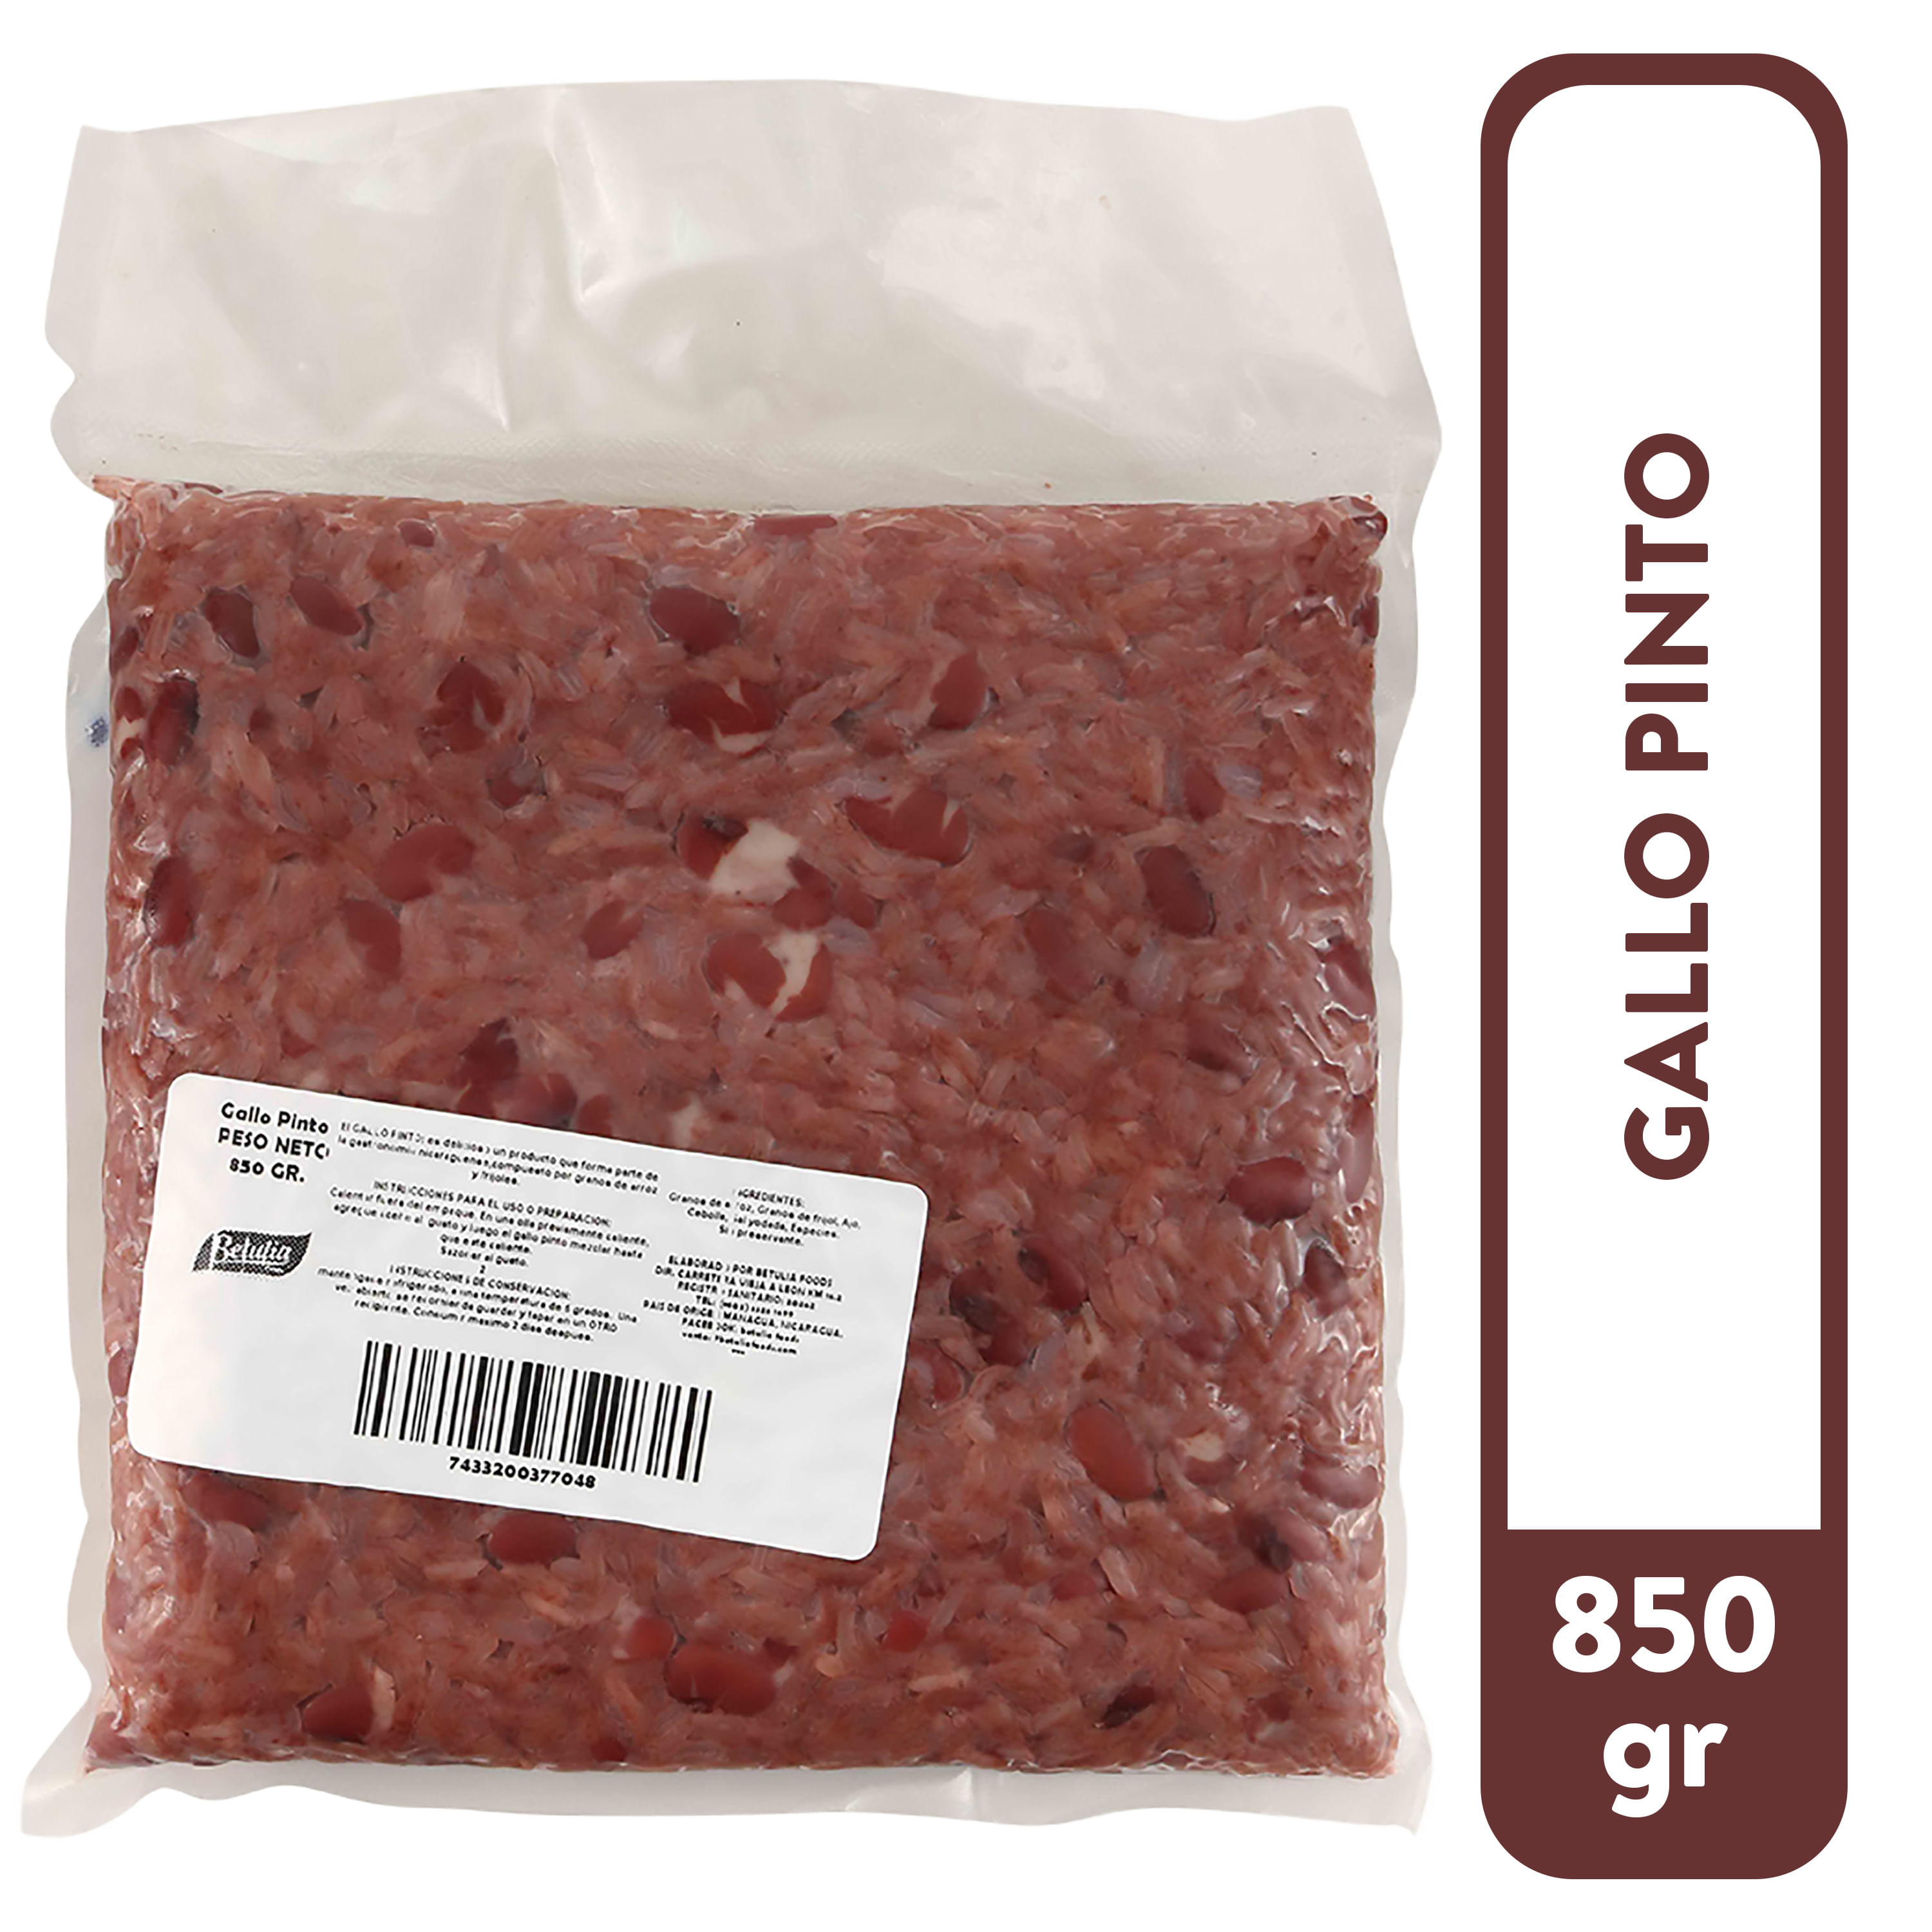 Betulia-Foods-Gallo-Pinto-850Gr-1-7201